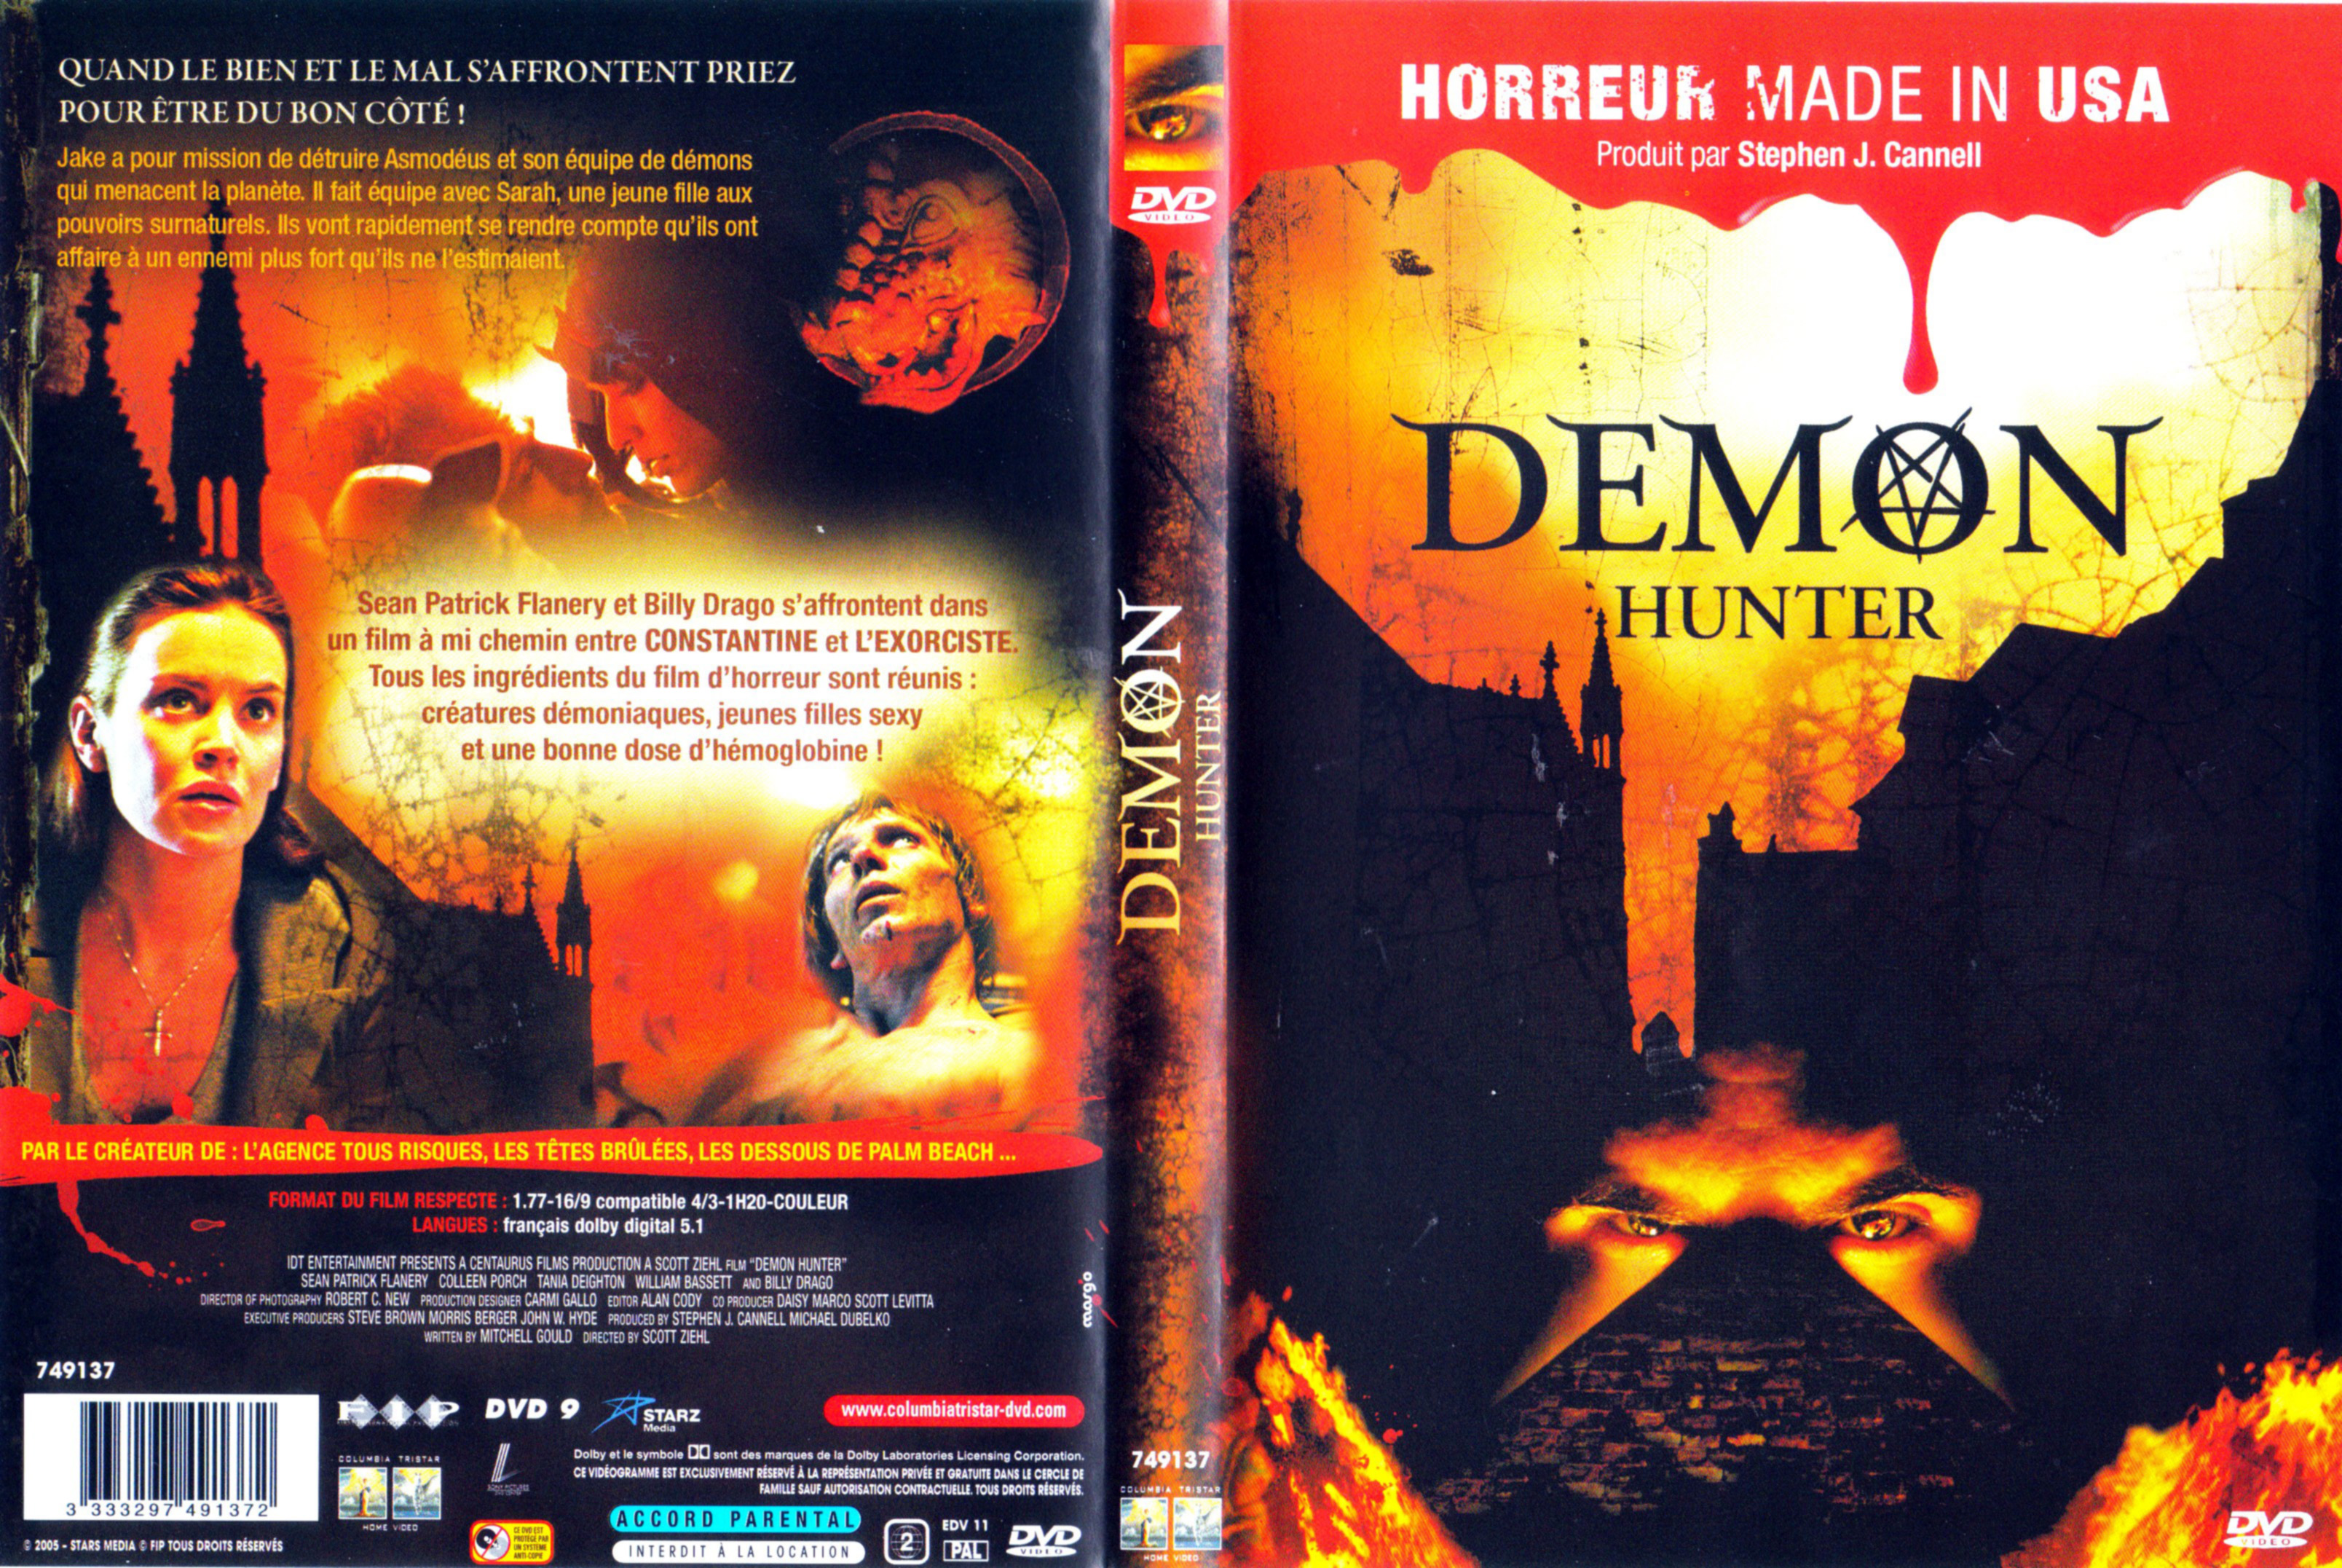 Jaquette DVD Demon hunter